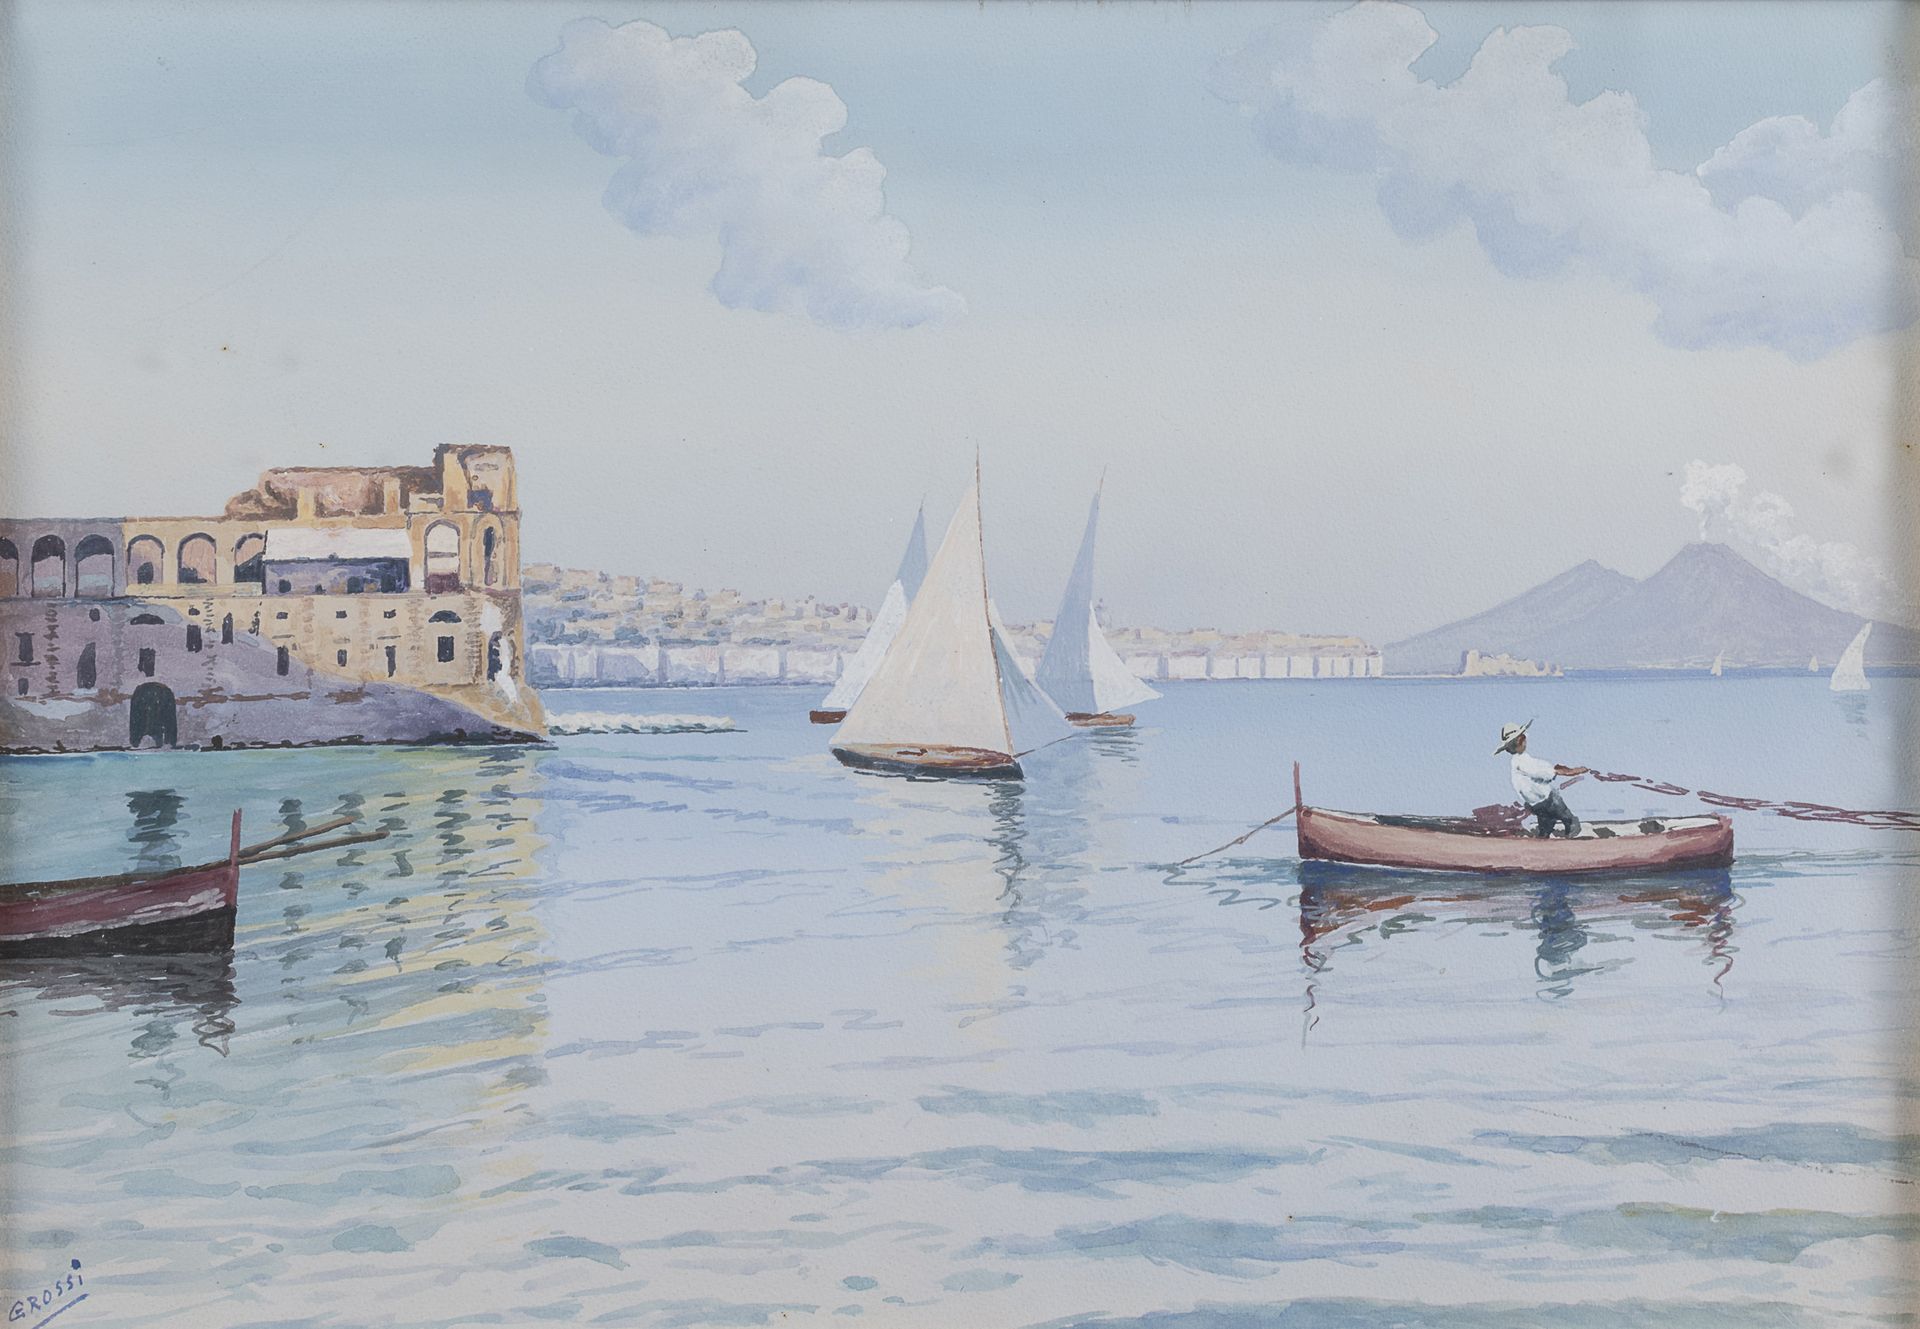 Null 那不勒斯画家，20世纪



那不勒斯的渔民

纸上水彩画，cm. 26 x 38

左下角有签名 "Grossi"。

有框